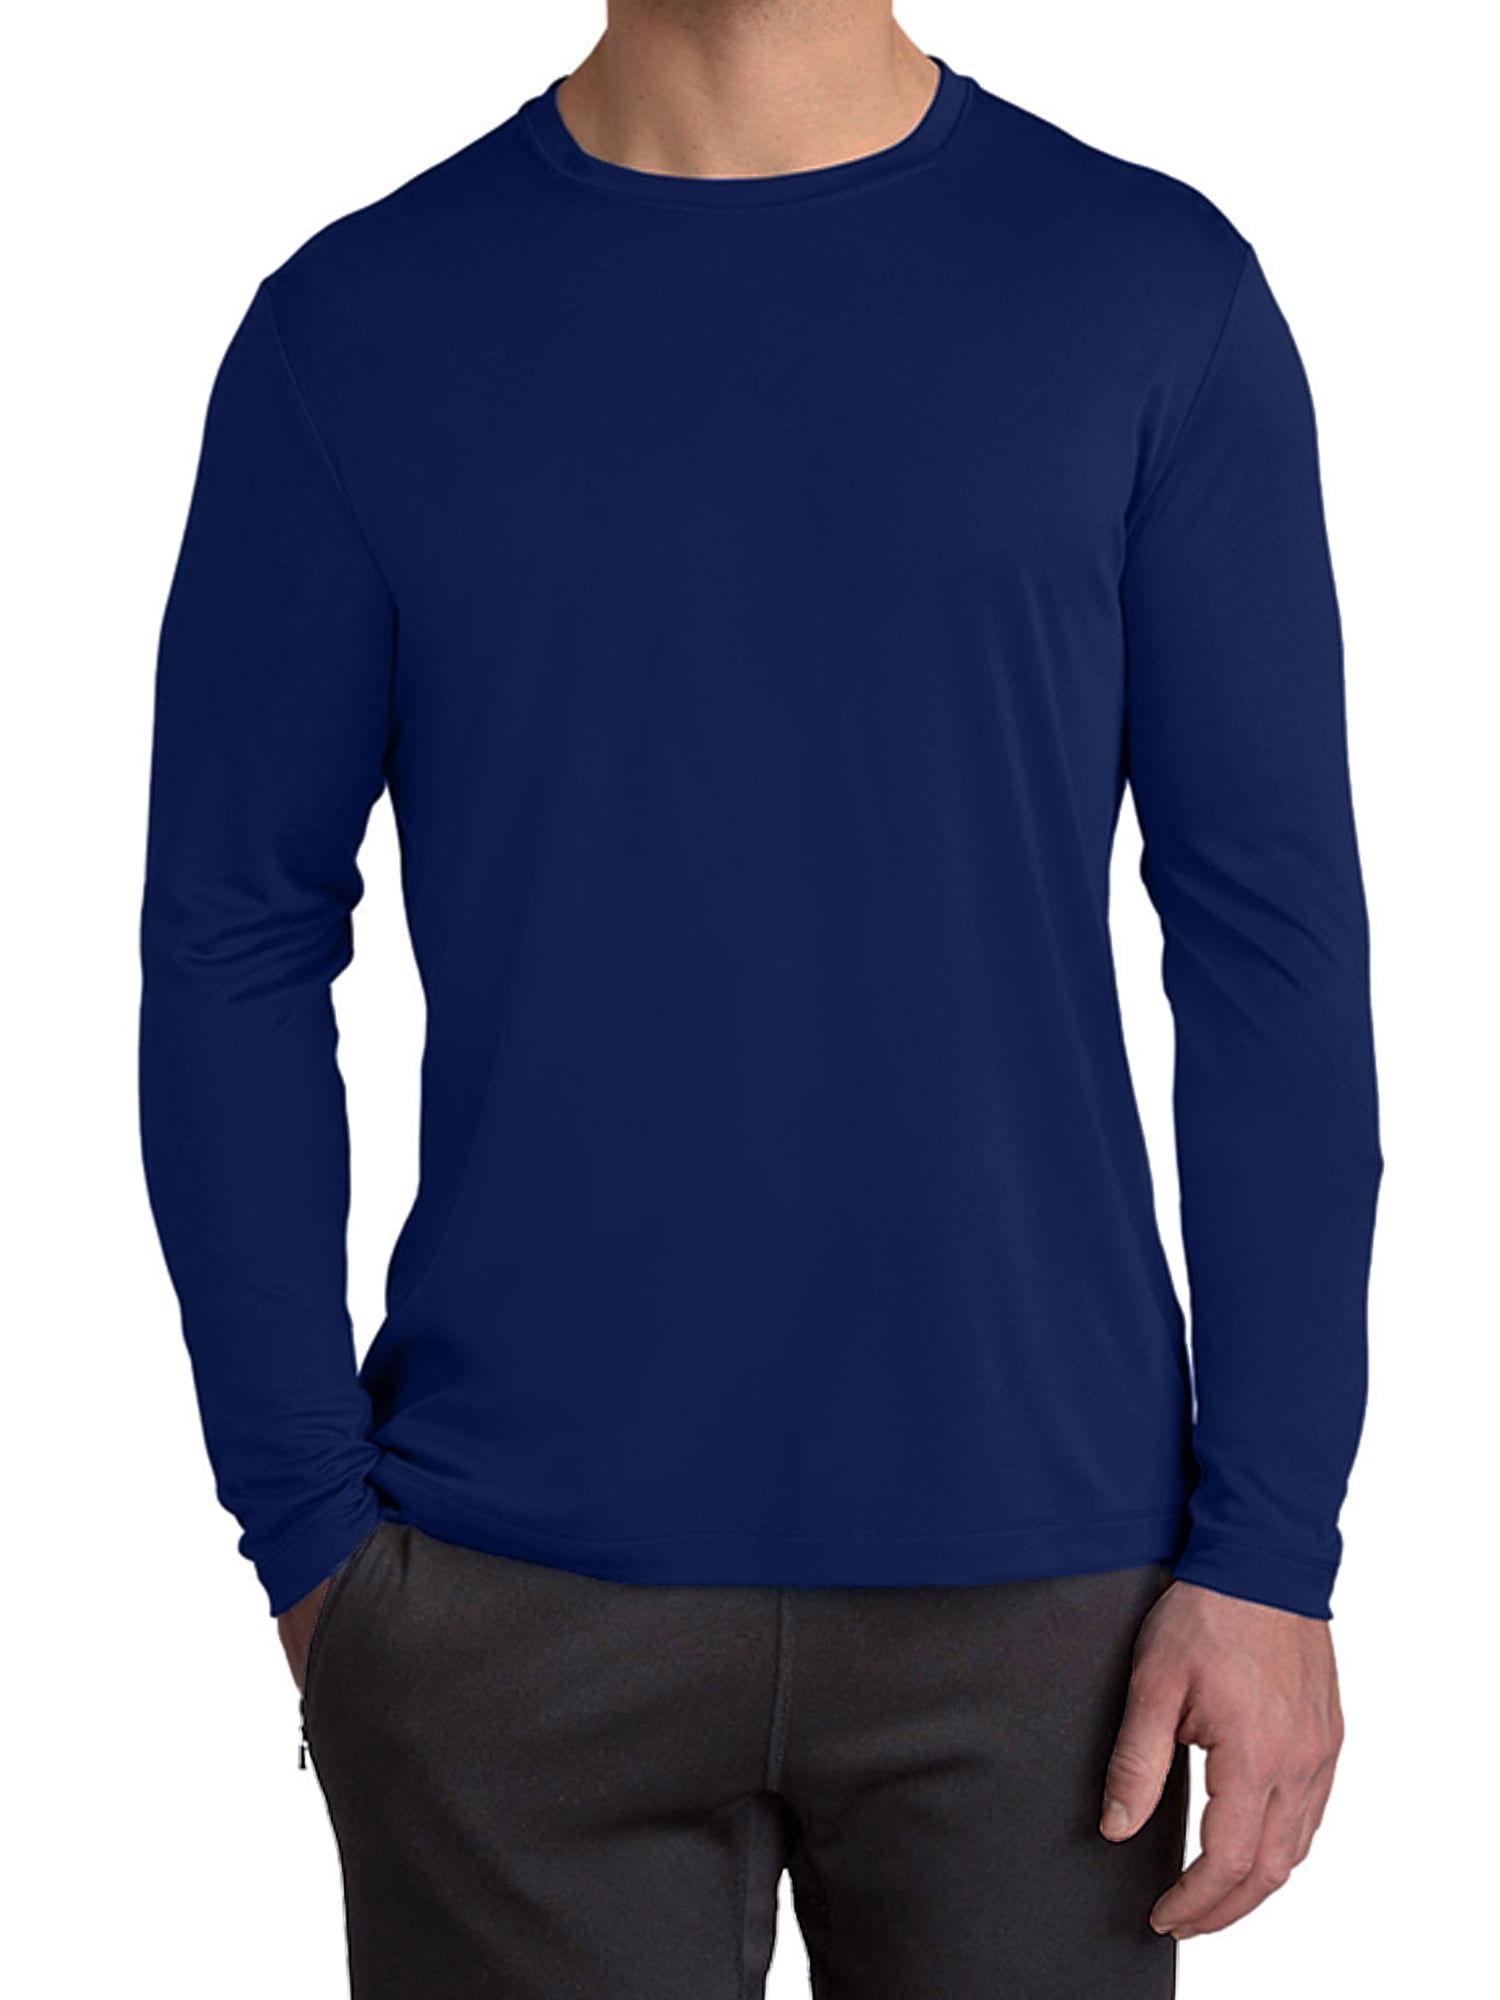 Galaxy by Harvic Boys Long Sleeve Tee Shirt 4 Pack Solid Basic Tagless V-Neck Knit Top